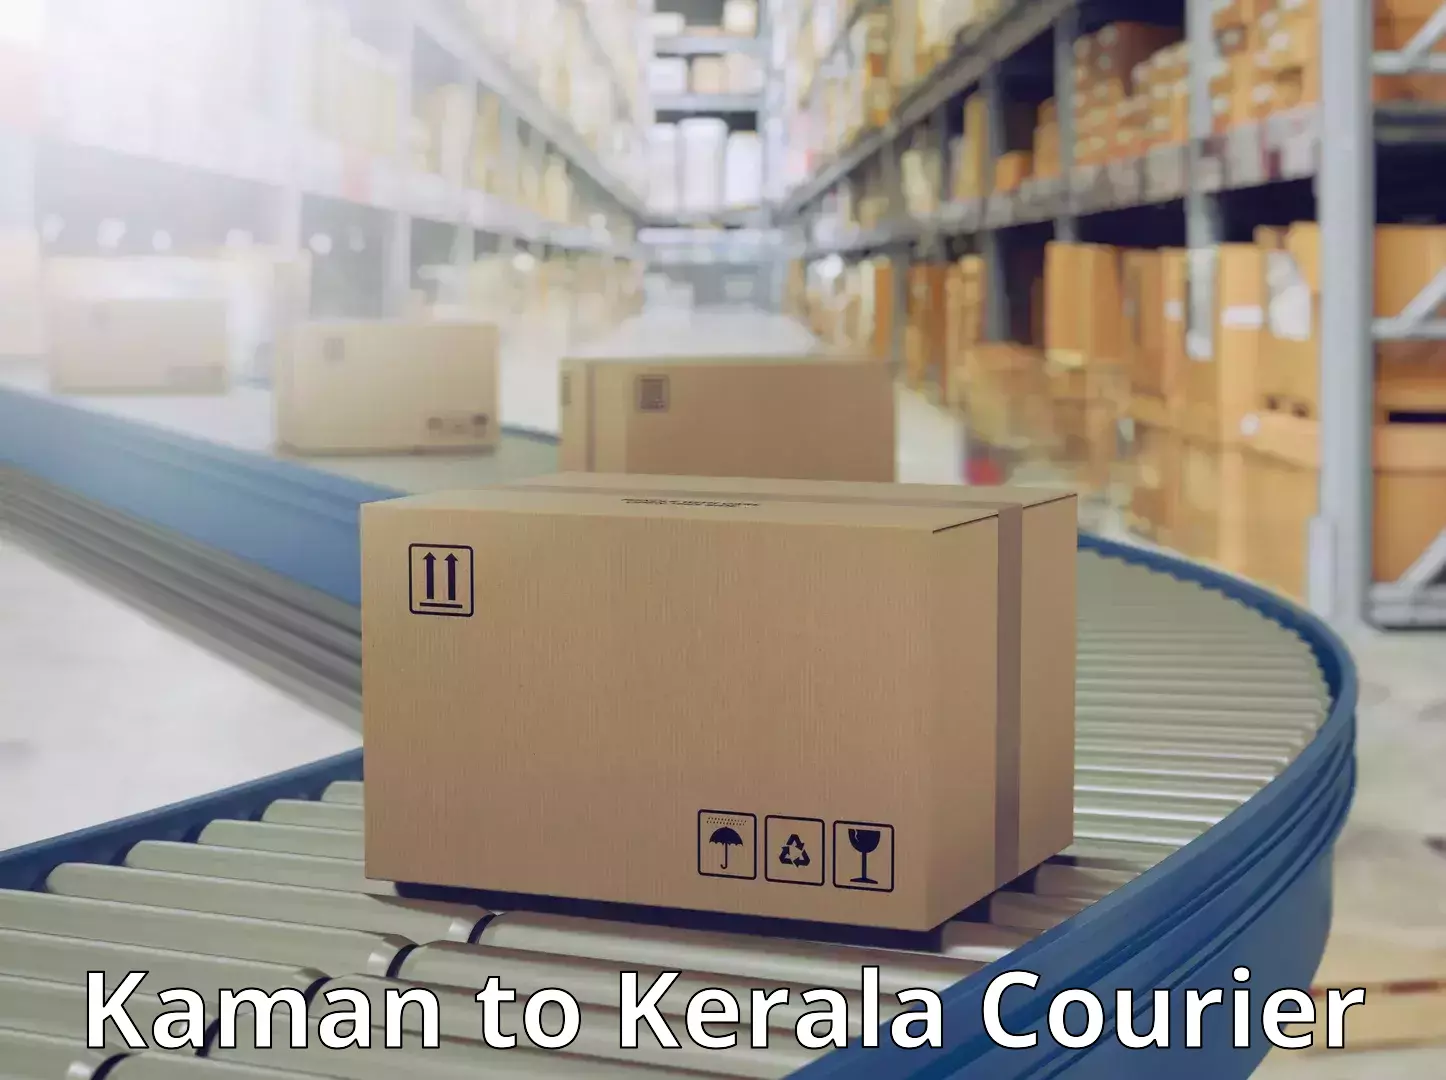 Efficient freight service Kaman to Kerala